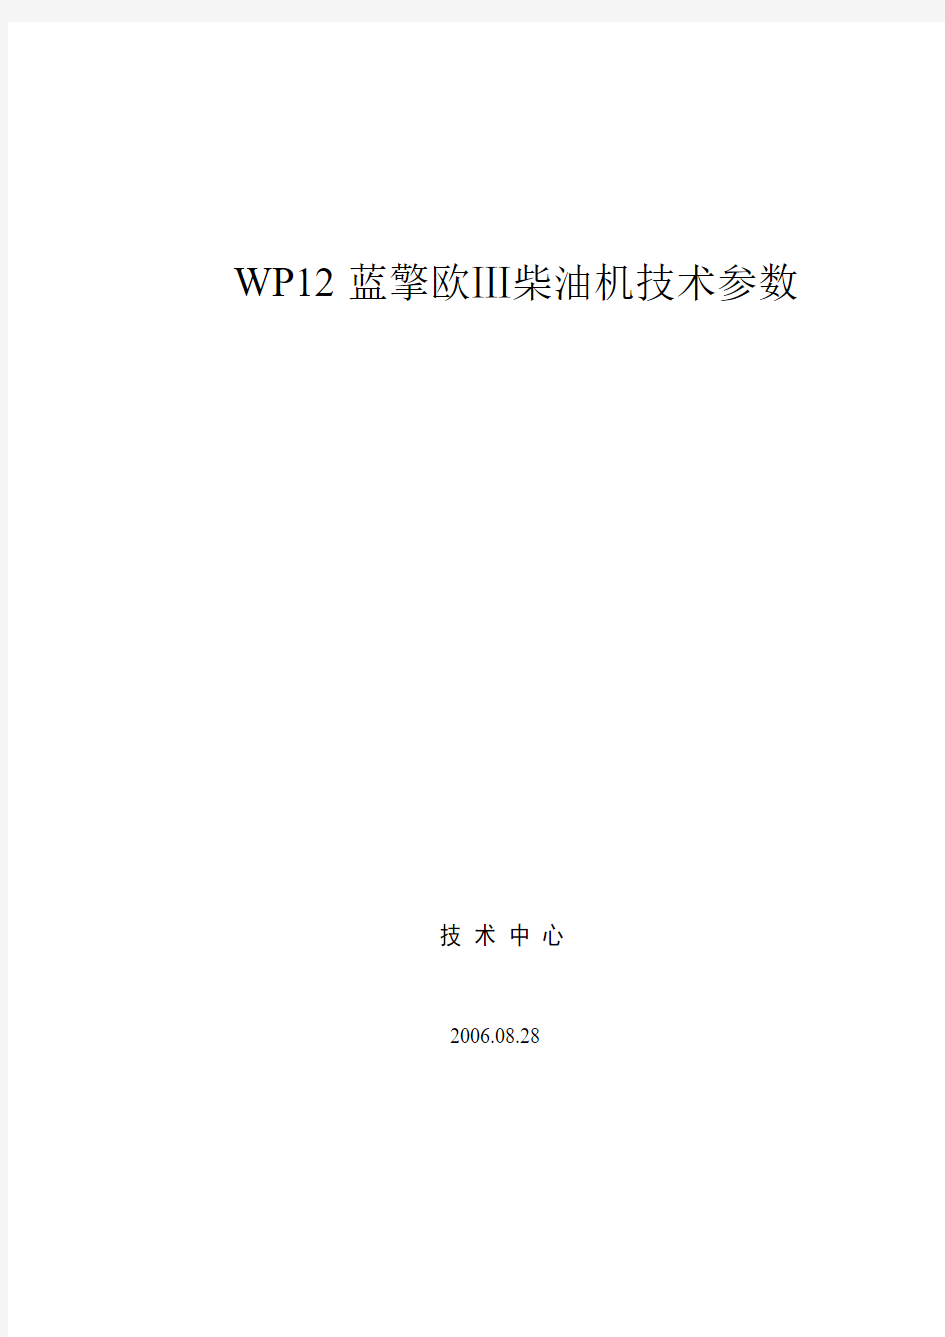 WP12系列柴油机技术参数